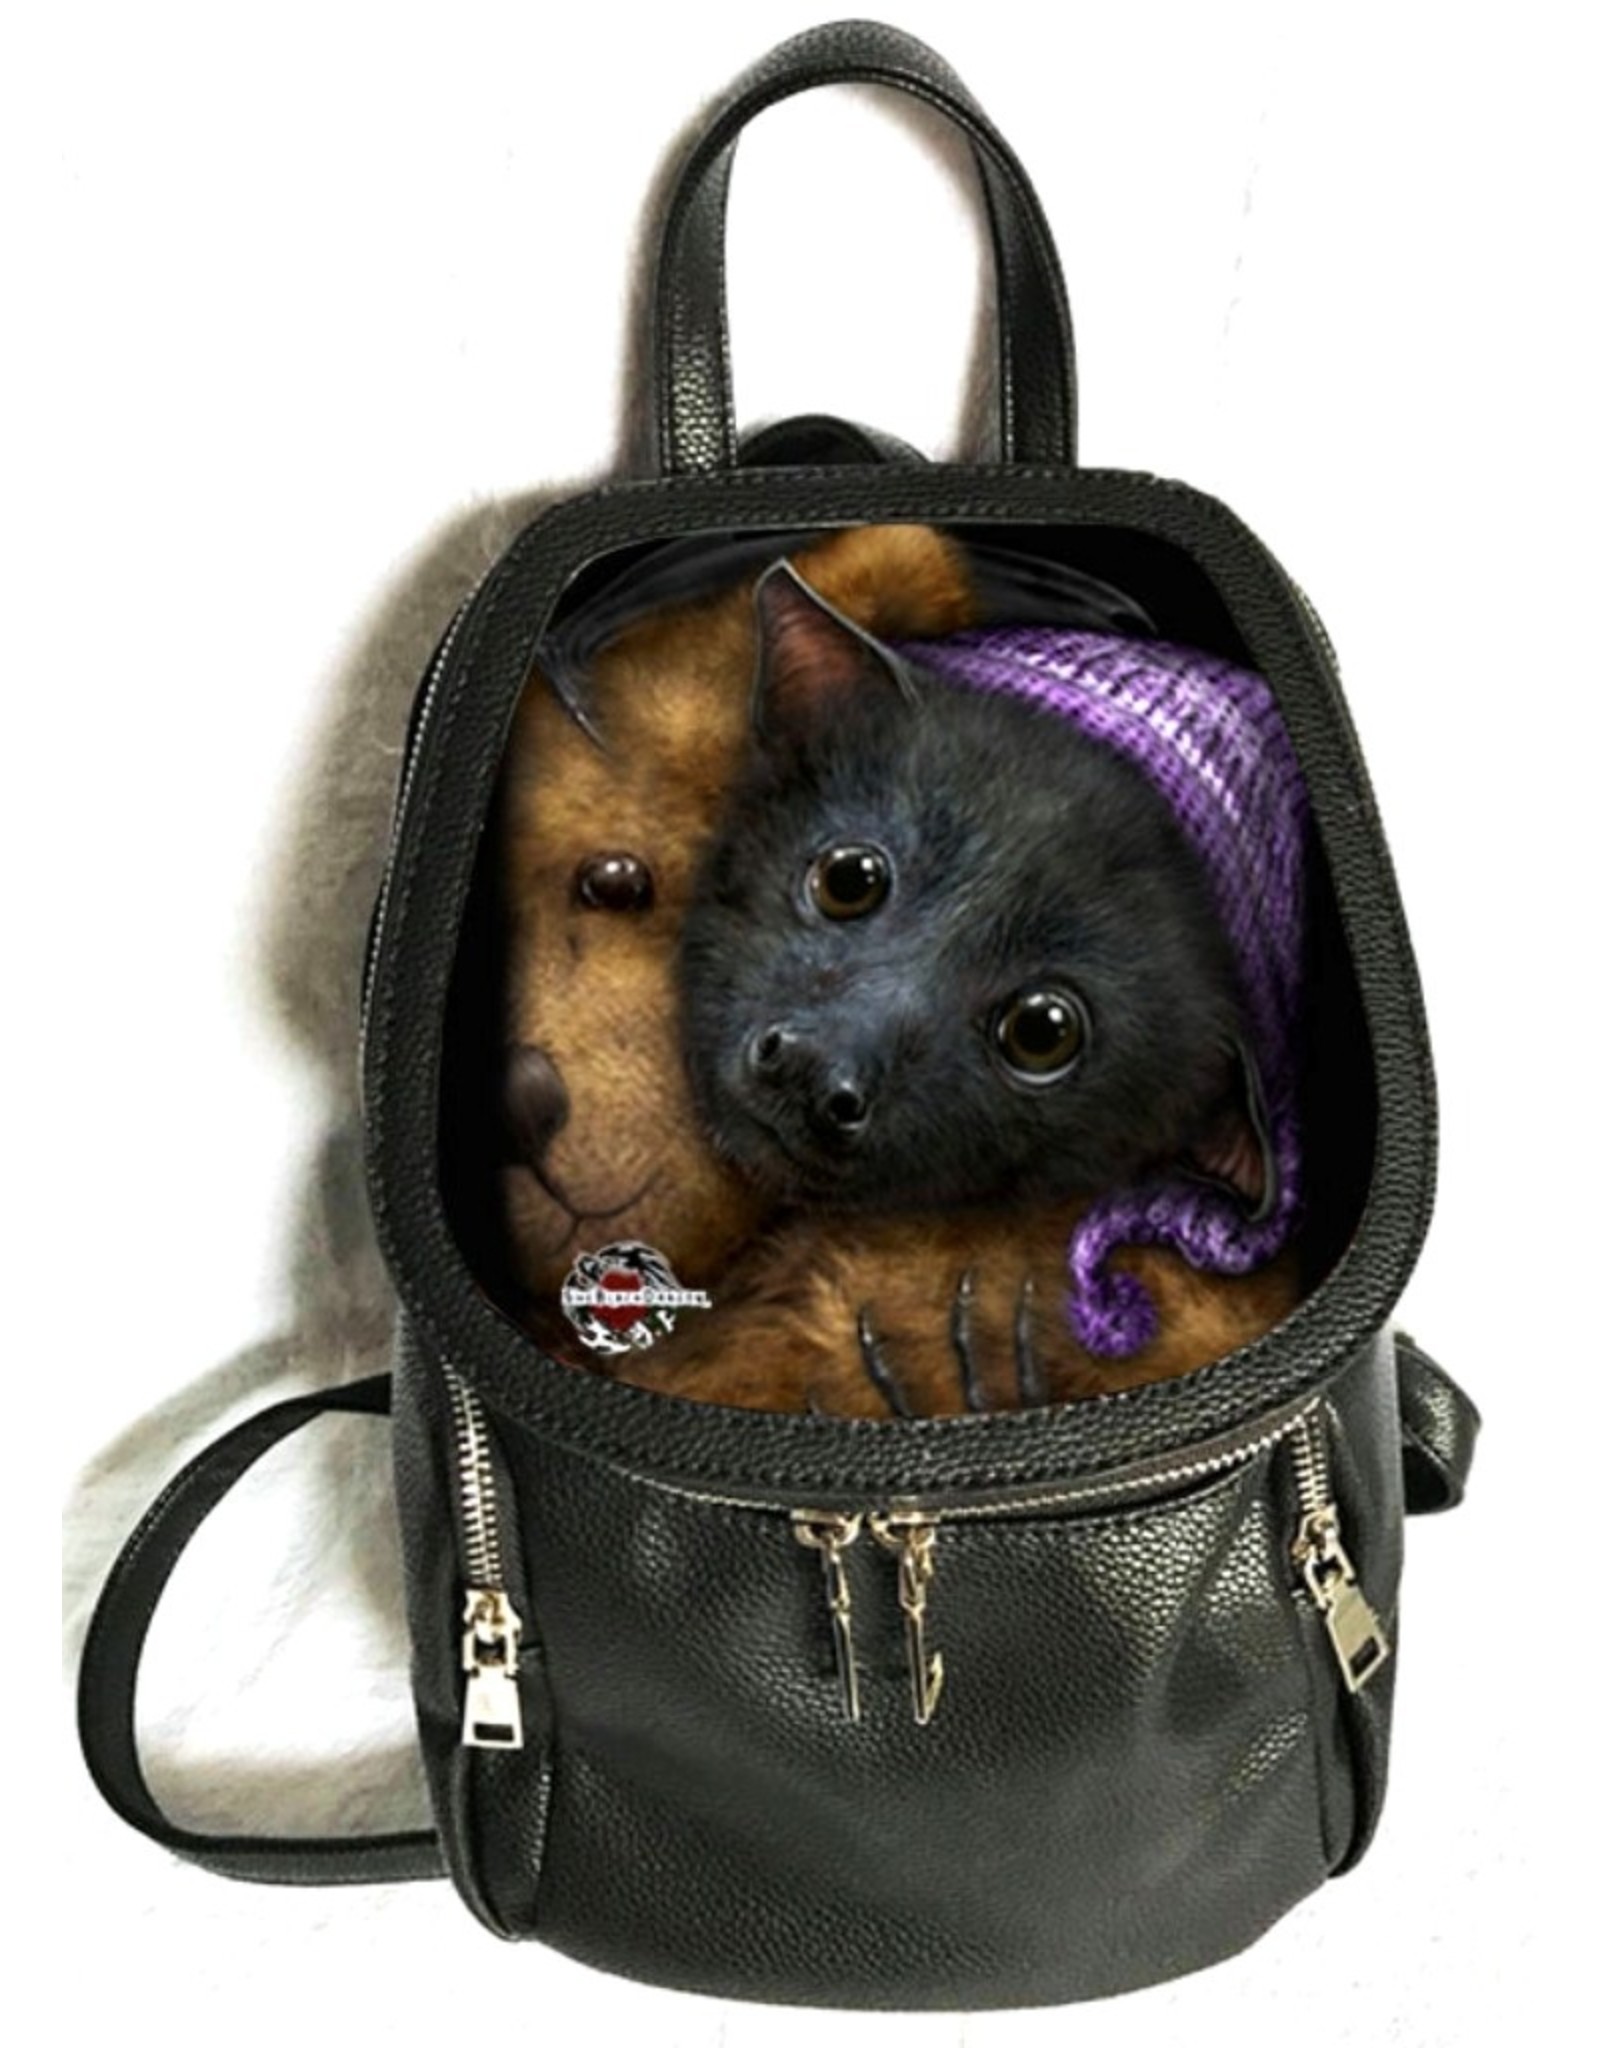 SheBlackDragon Gothic bags Steampunk bags - SheBlackDragon 3D lenticular Baby Bats backpack